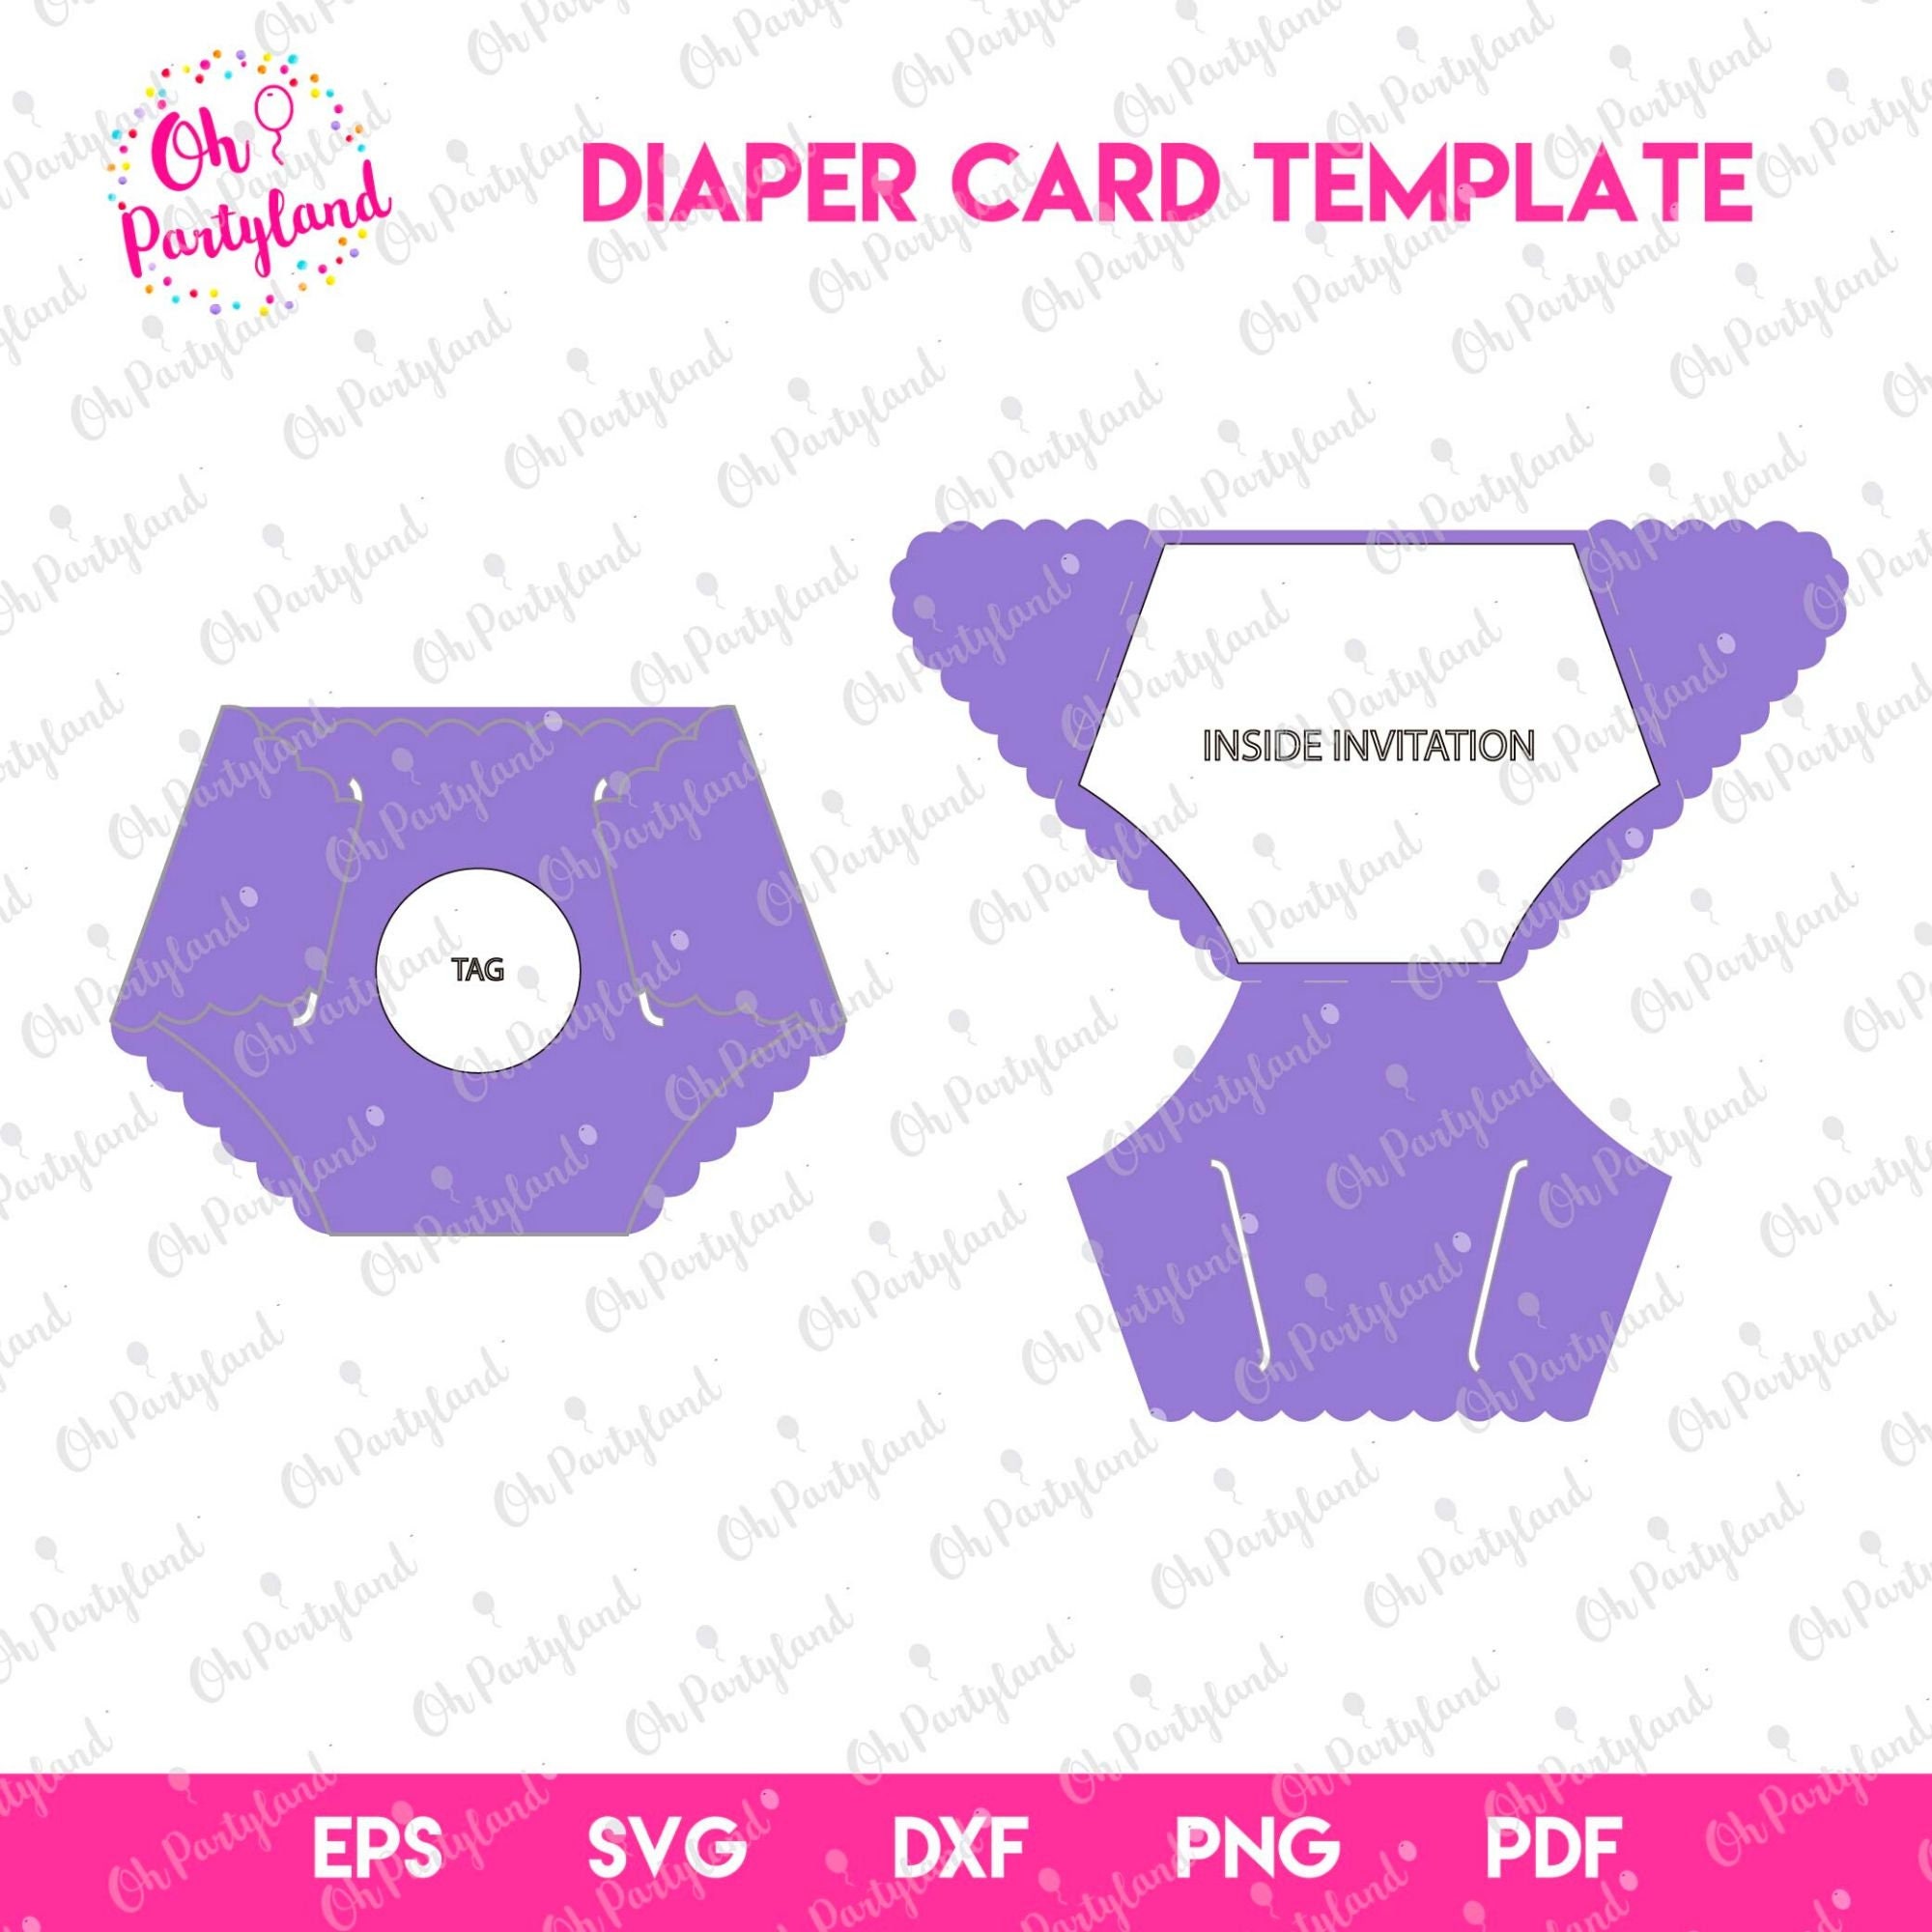 Free Printable Diaper Card Template